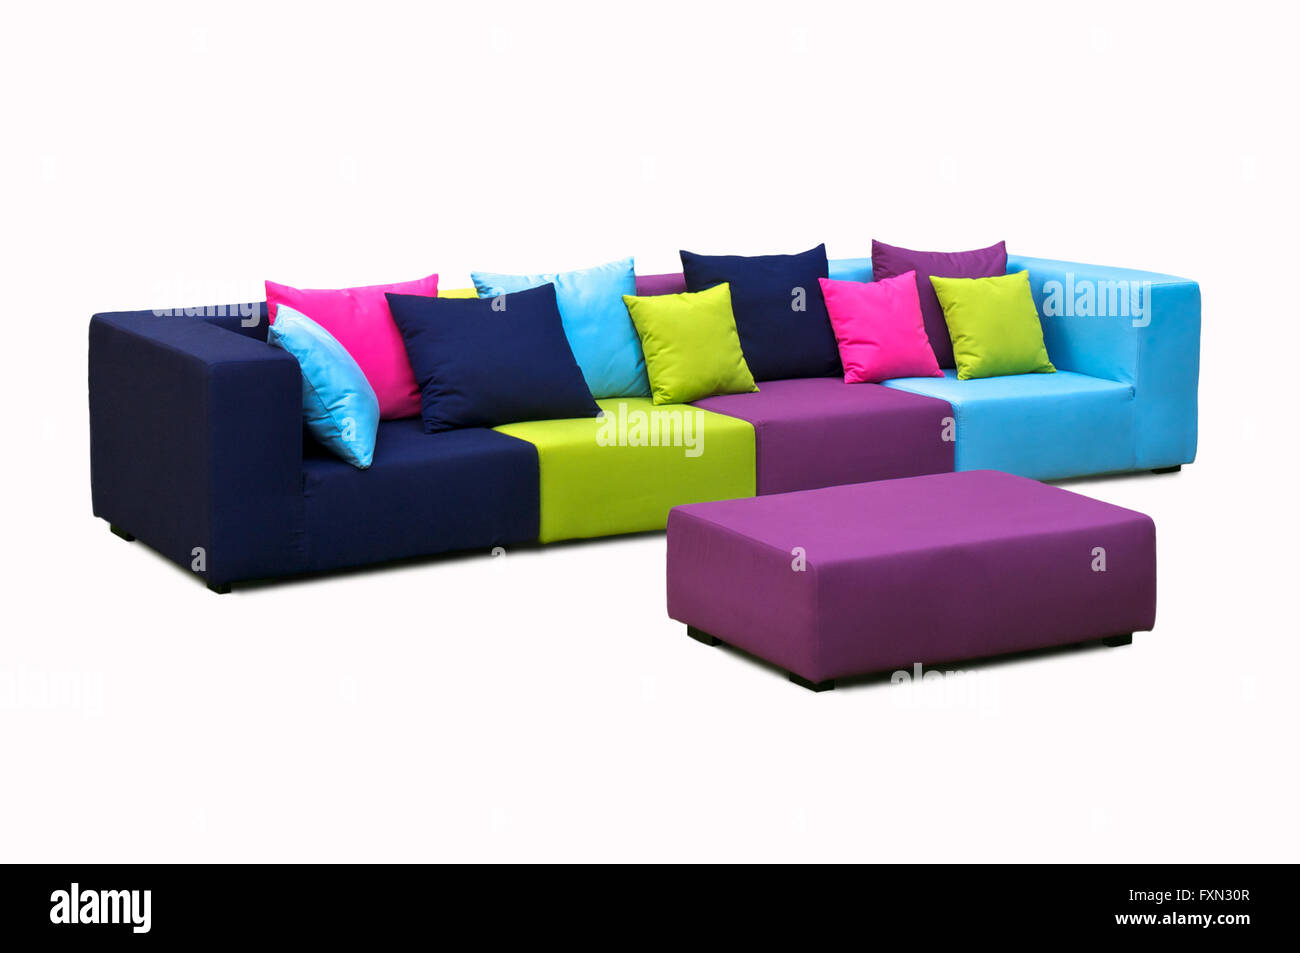 Outdoor indoor divano con acqua cuscini resistente Foto Stock